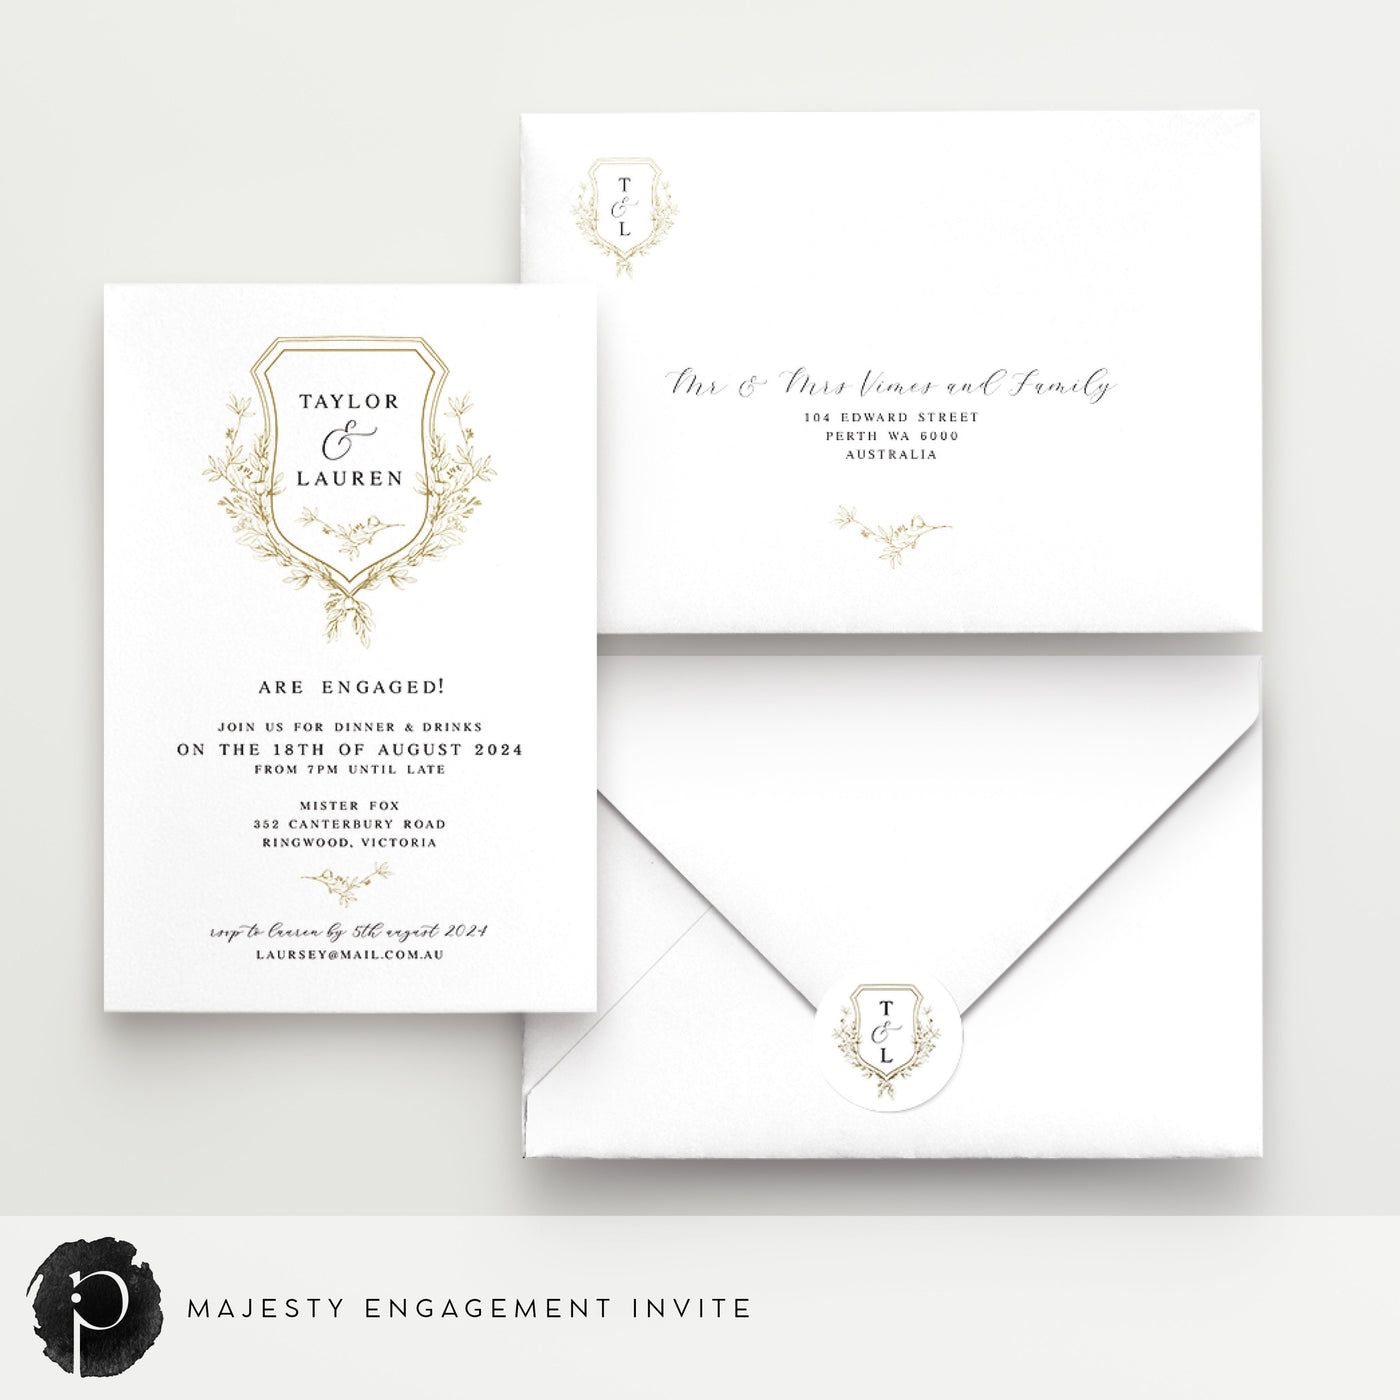 Majesty - Engagement Invitations